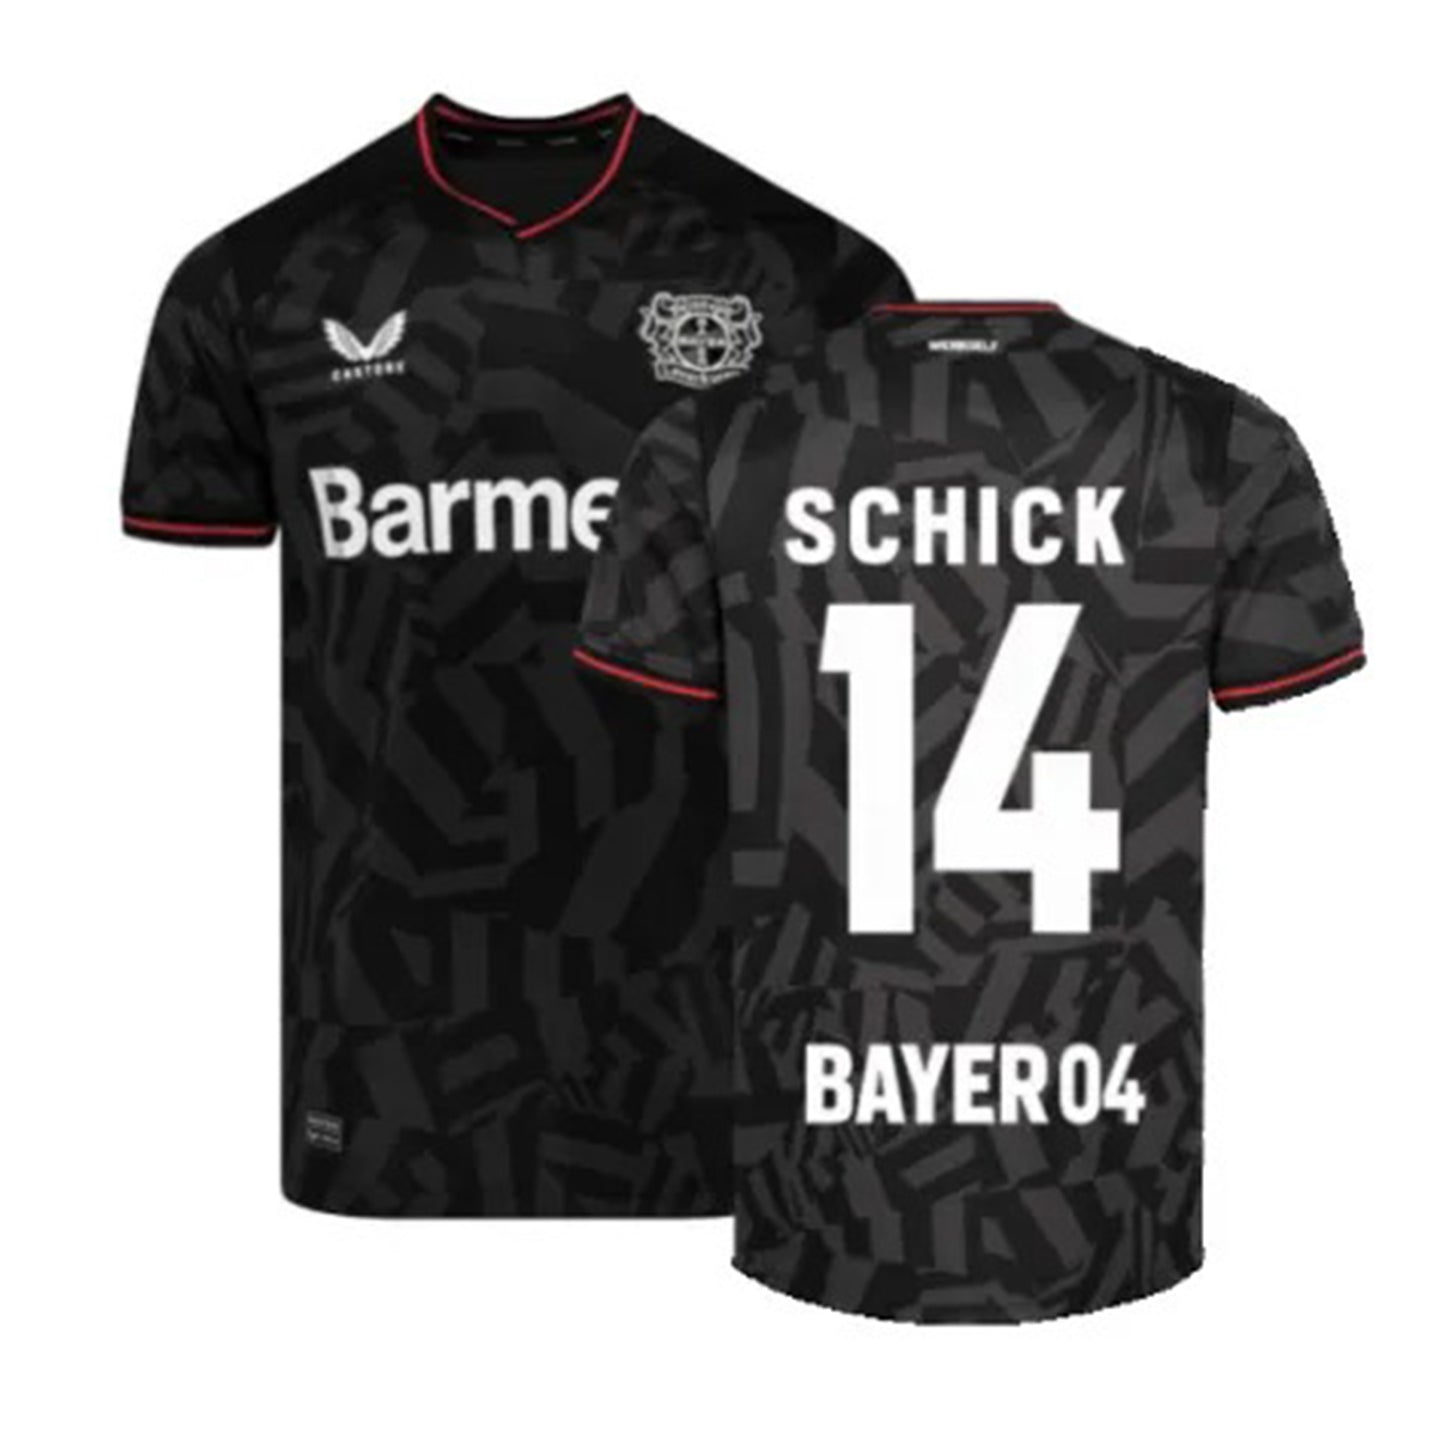 Patrik Schick Bayern Leverkusen 14 Jersey